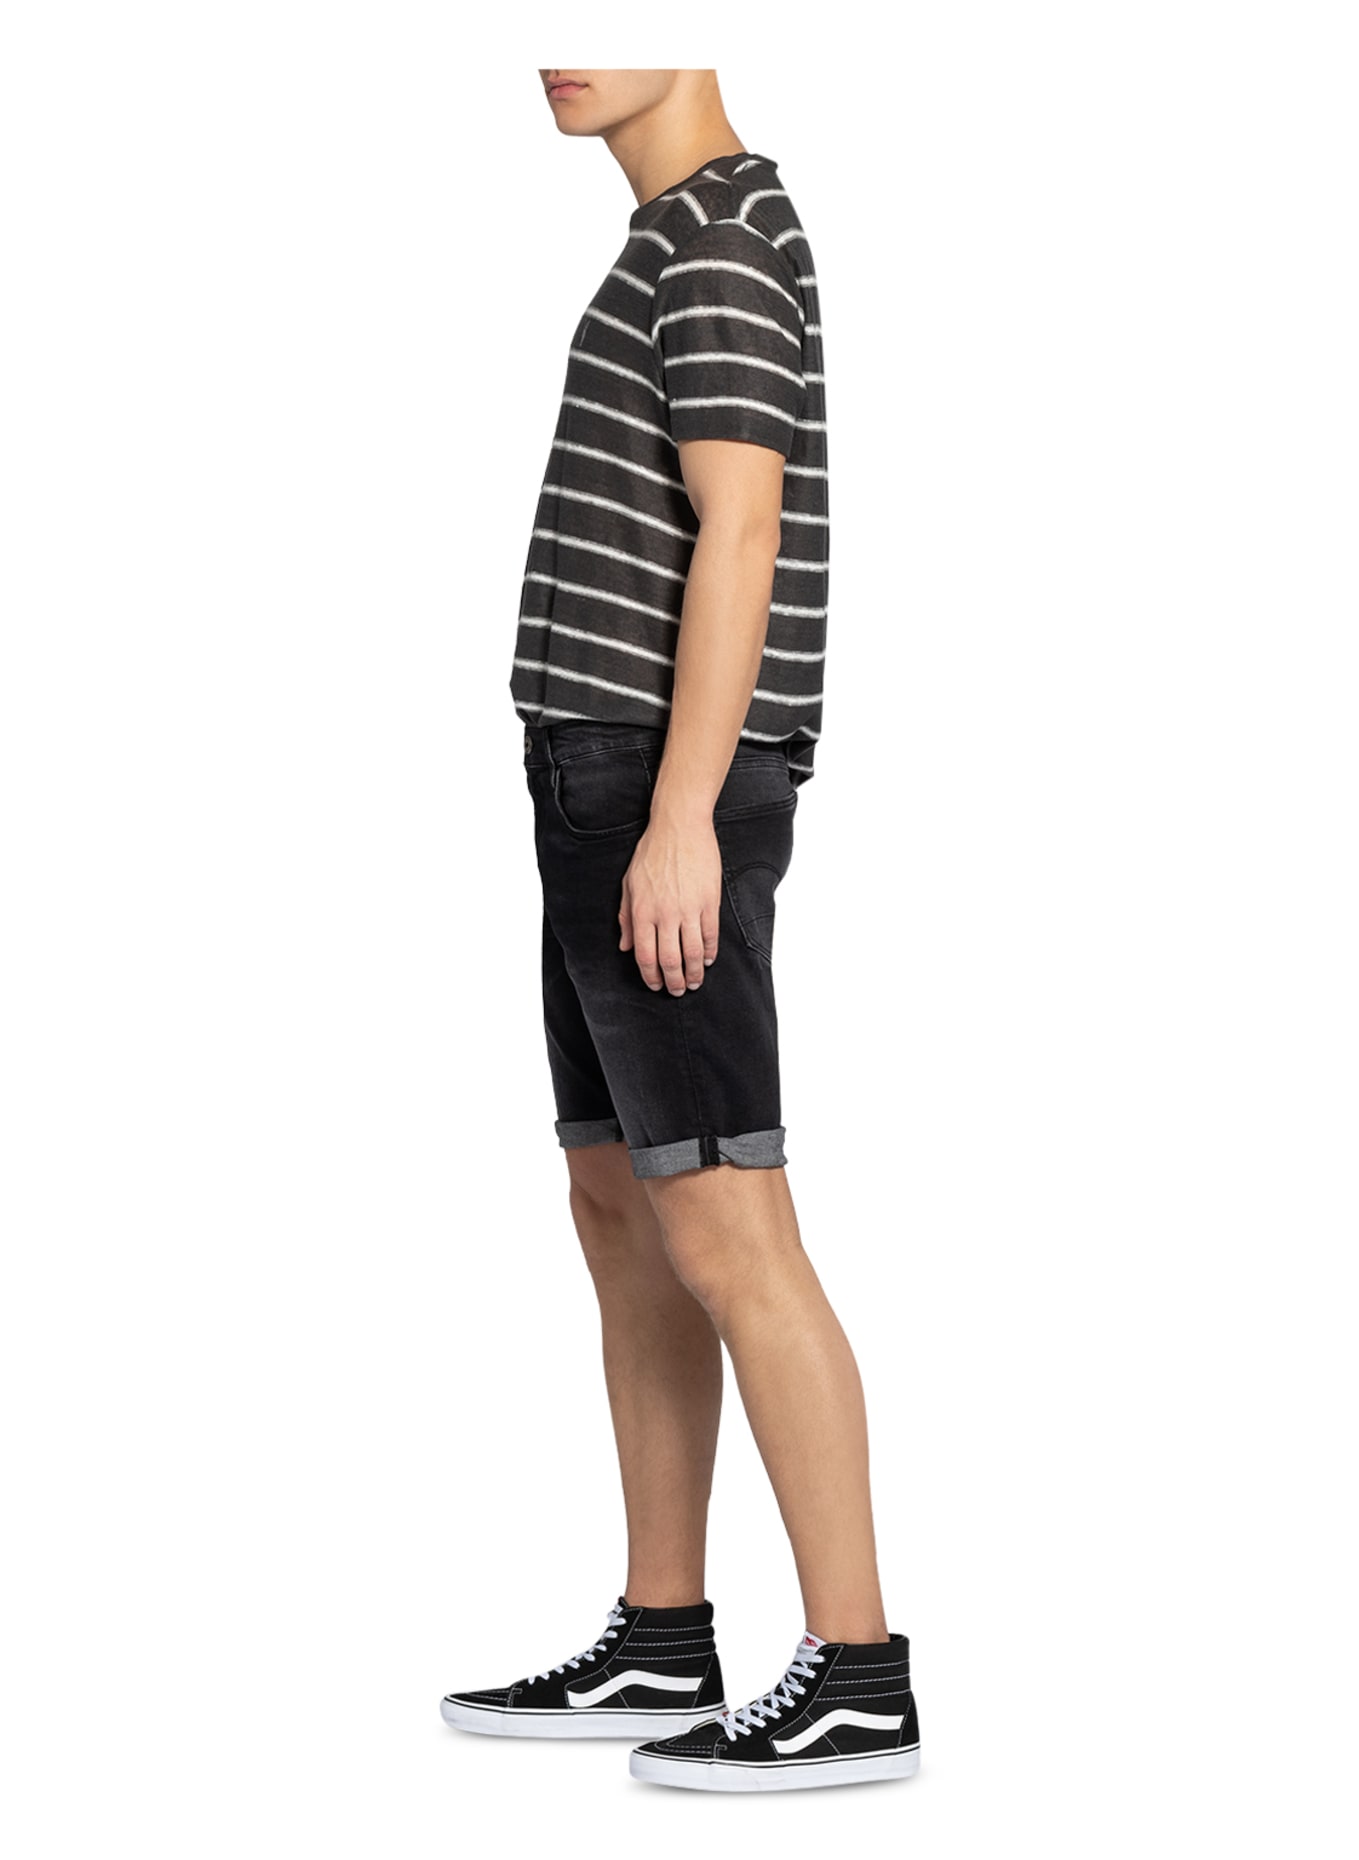 G-Star RAW Denim shorts 3301 slim fit, Color: 9887 Medium Aged Grey (Image 4)